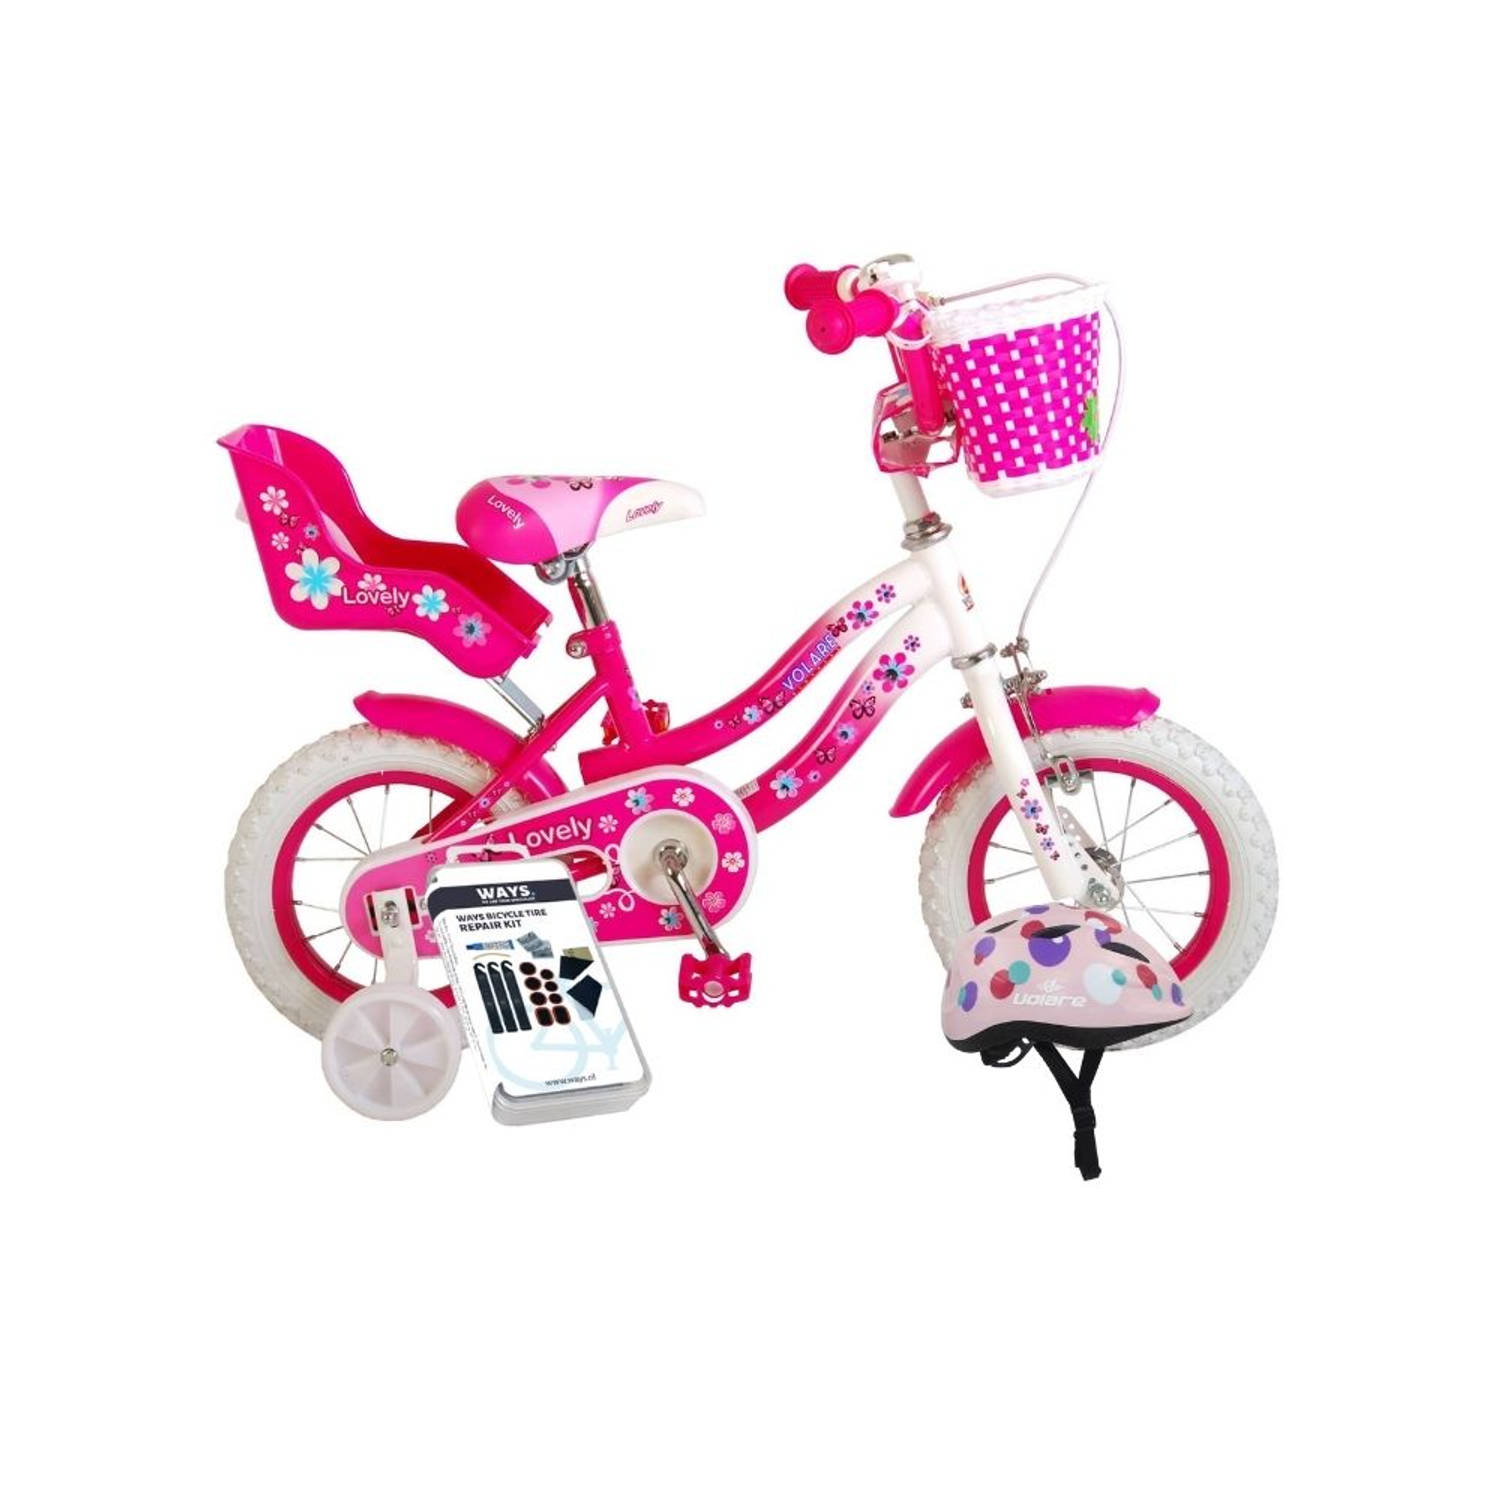 Volare Kinderfiets Lovely - 12 inch - Roze/Wit - Inclusief fietshelm & accessoires